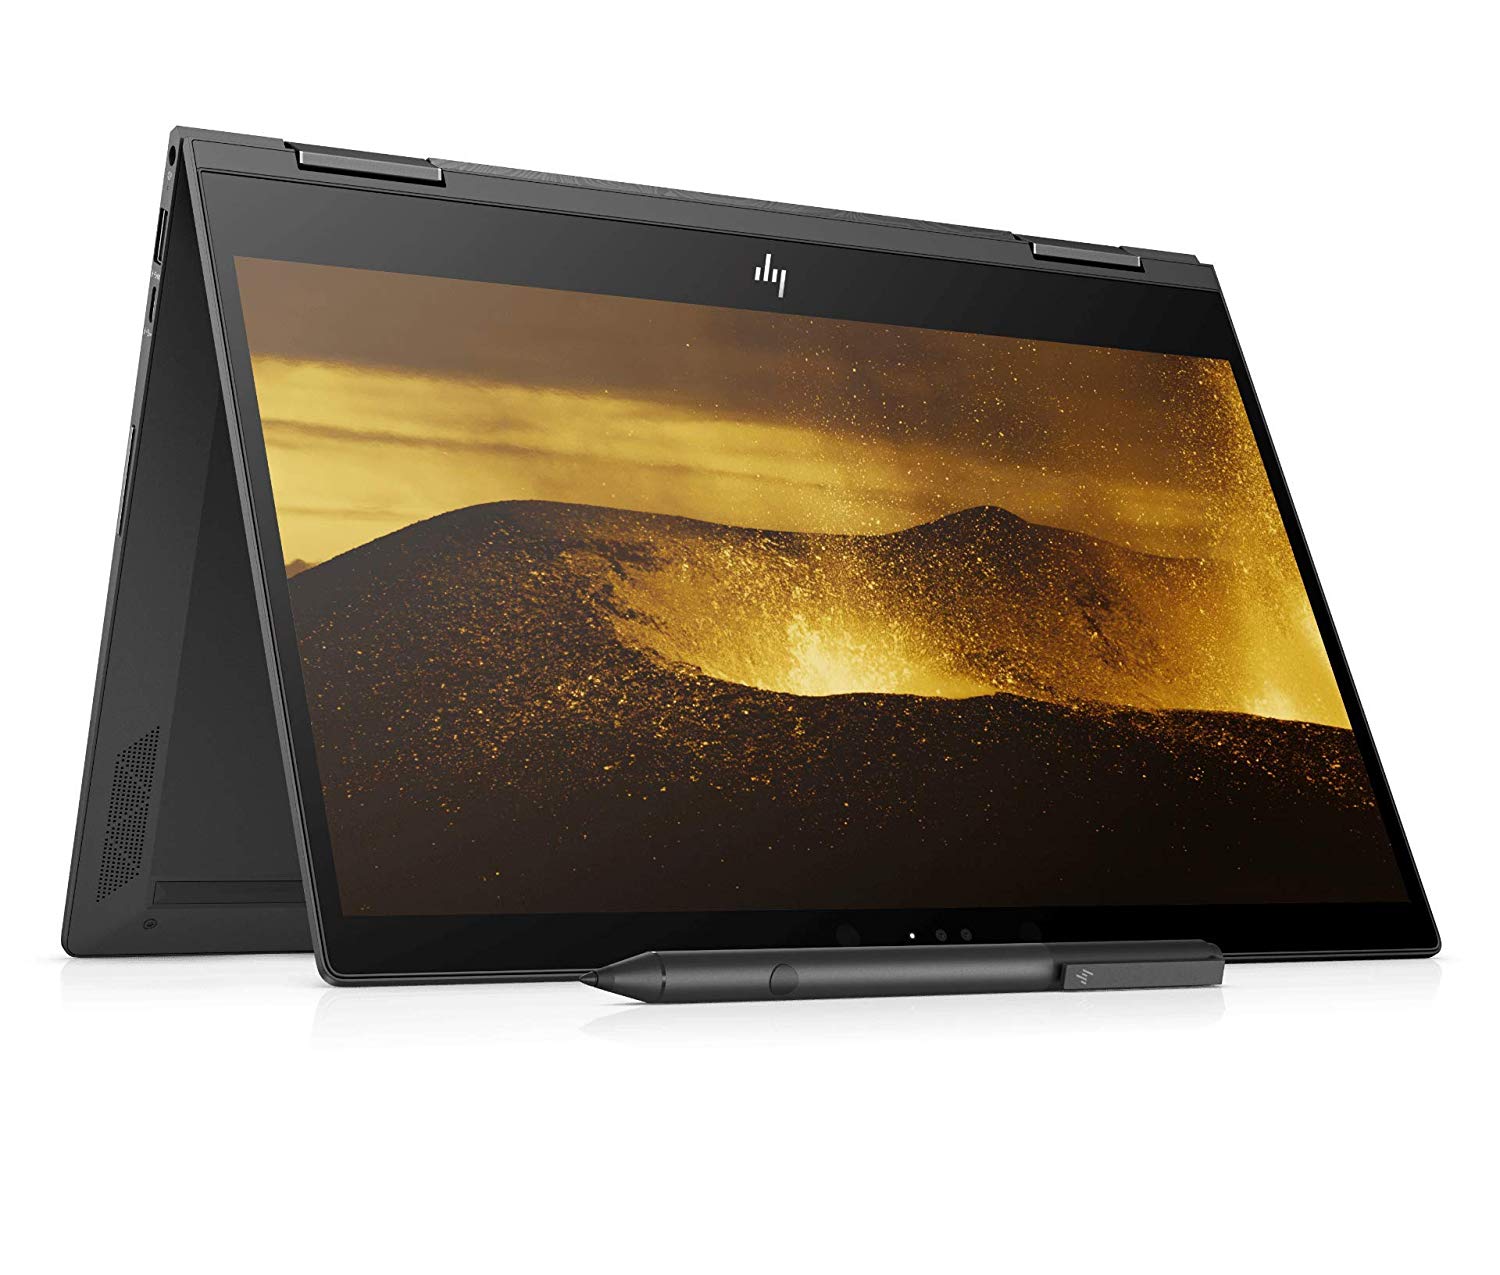 Laptop HP Envy 13-AG0035AU 2018 13.3-inch  (Ryzen 5 2500U/8GB/256 GB SSD/Windows 10 Home, 64 Bit/Integrated Graphics), Dark Ash Silver